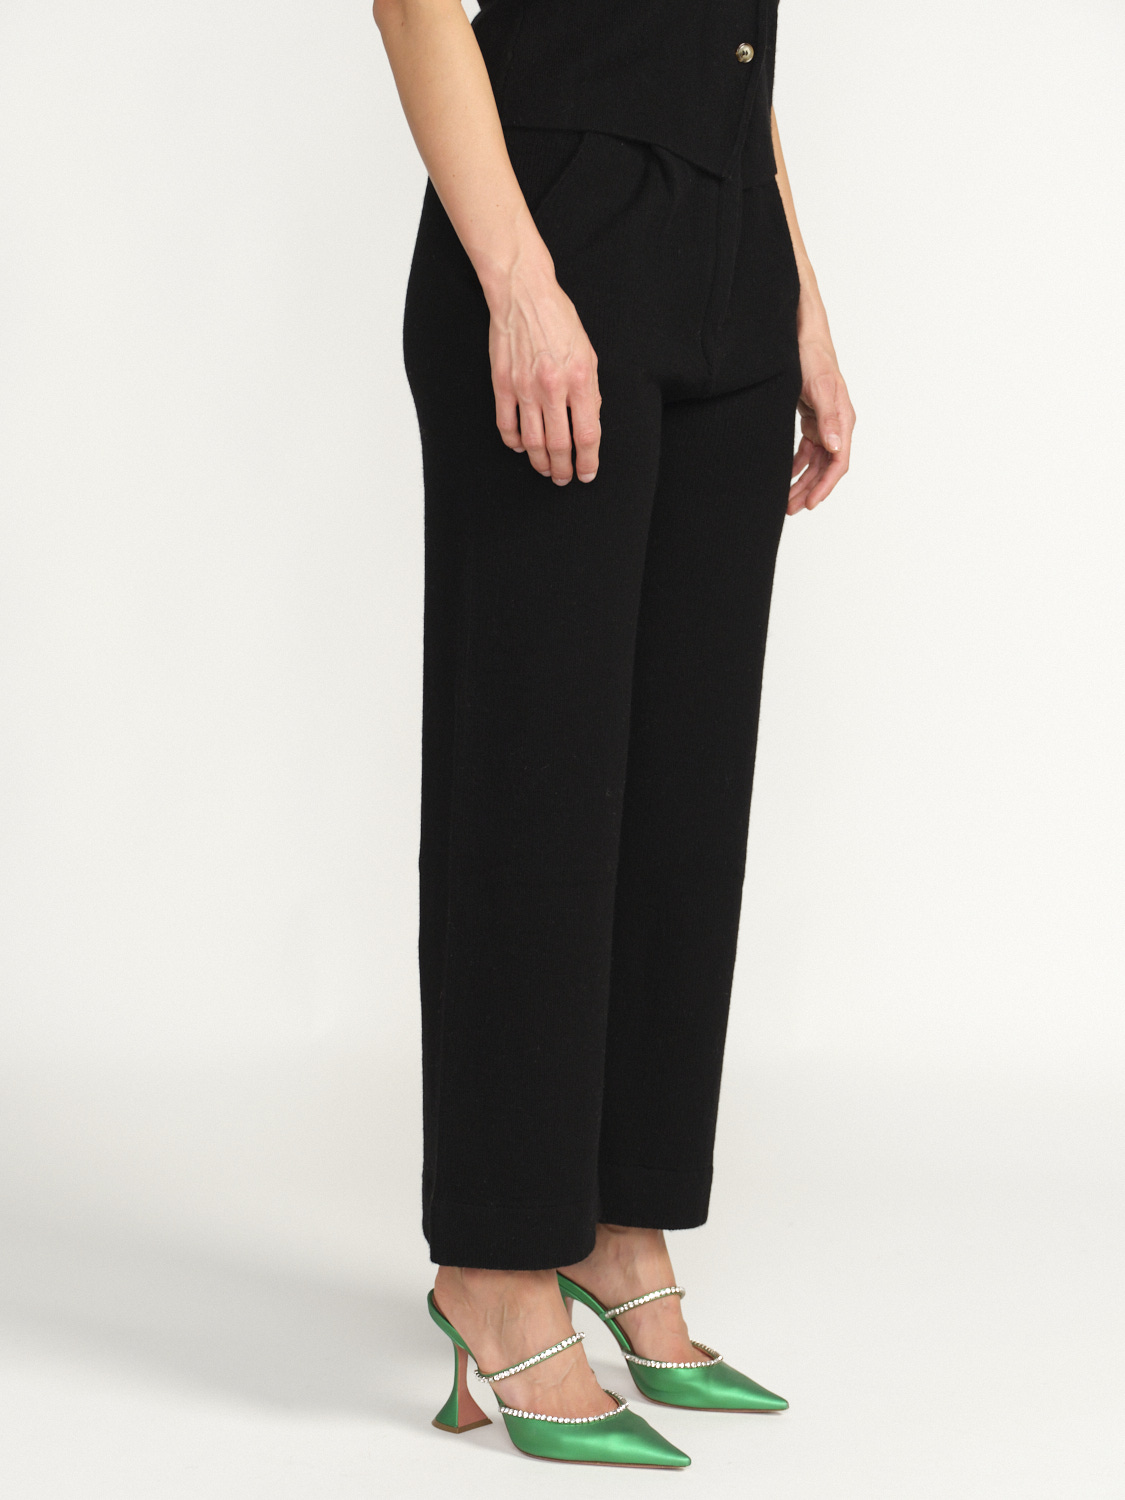 Gitta Banko Wide leg pants with elastic waistband made of wool black XS/S